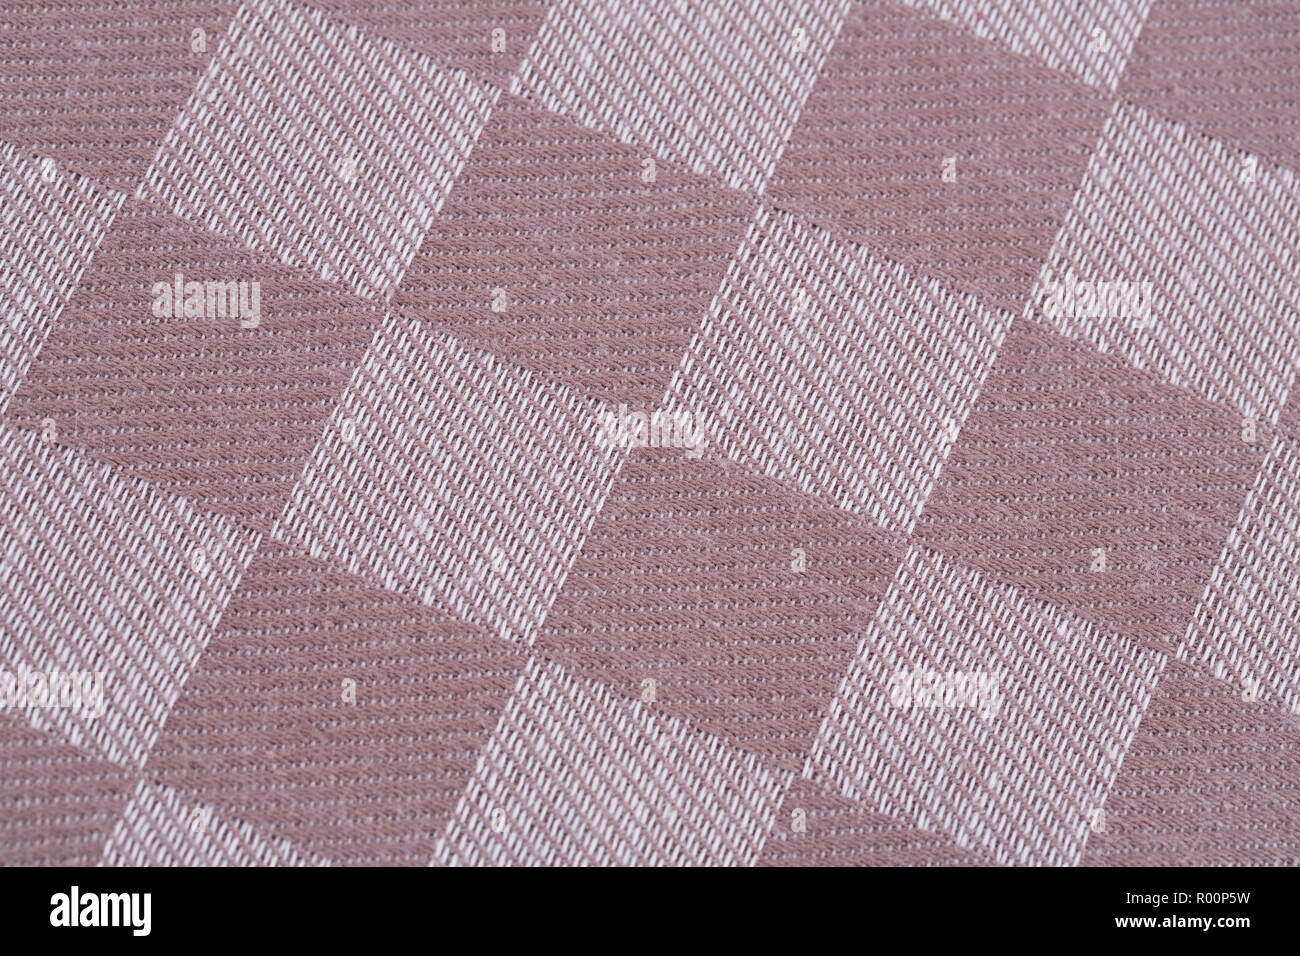 Mantel cuadriculado textura como fondo, primer plano de imagen. Foto de stock